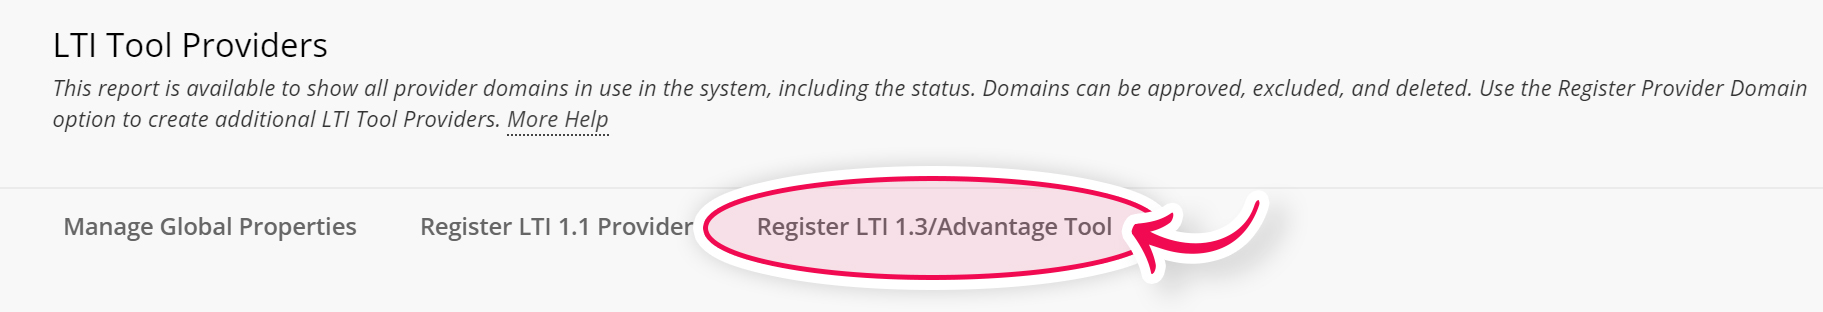 Register LTI 1.3/Advantage Tool inside LTI tool provider